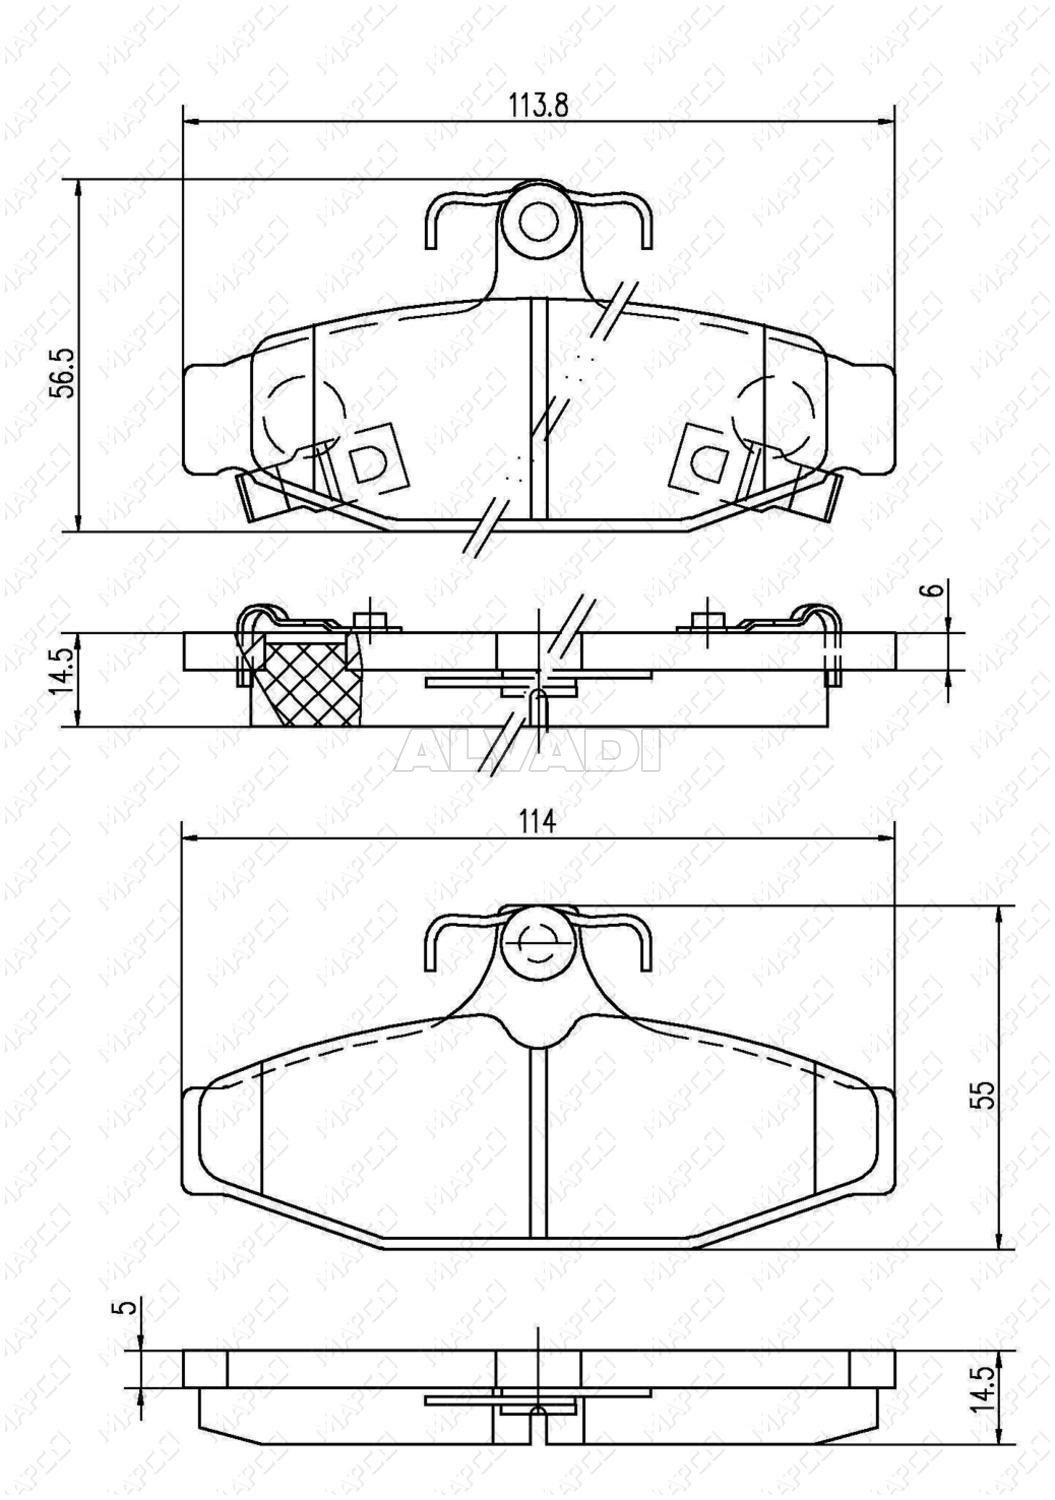 32 Daewoo Forklift Parts Diagram